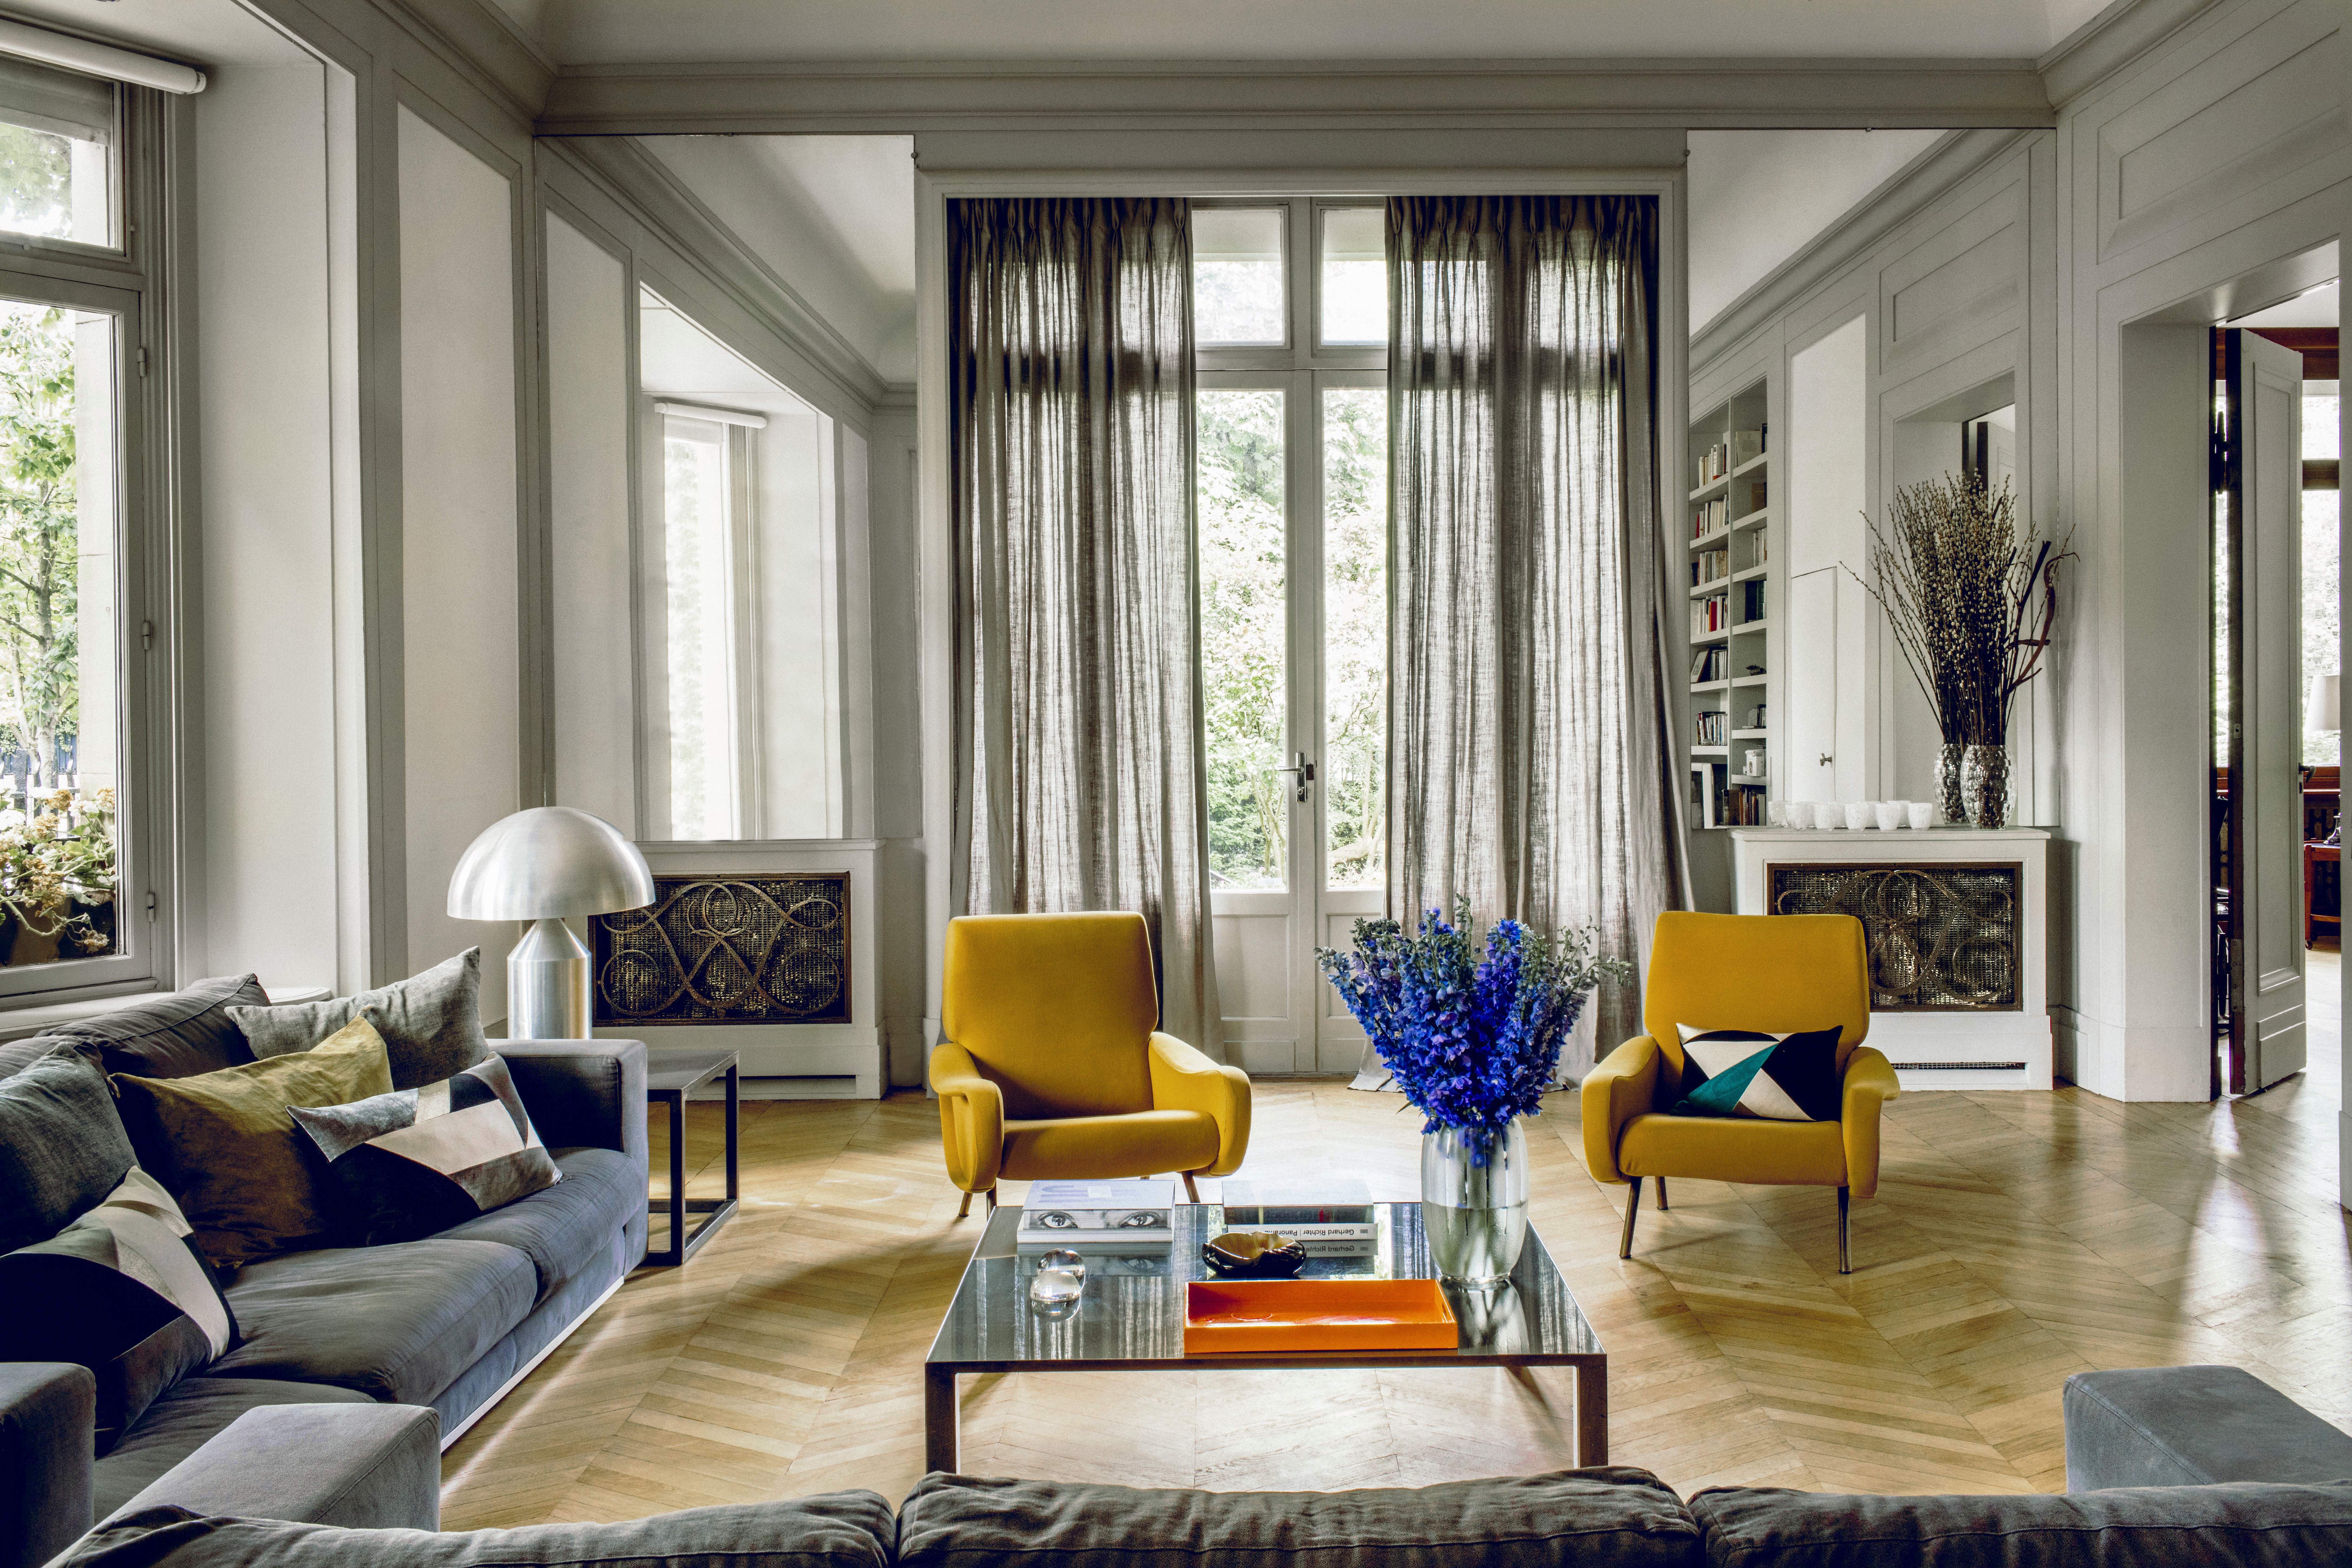 dam Pygmalion Dierbare Art deco style and modern design combine in this Parisian home